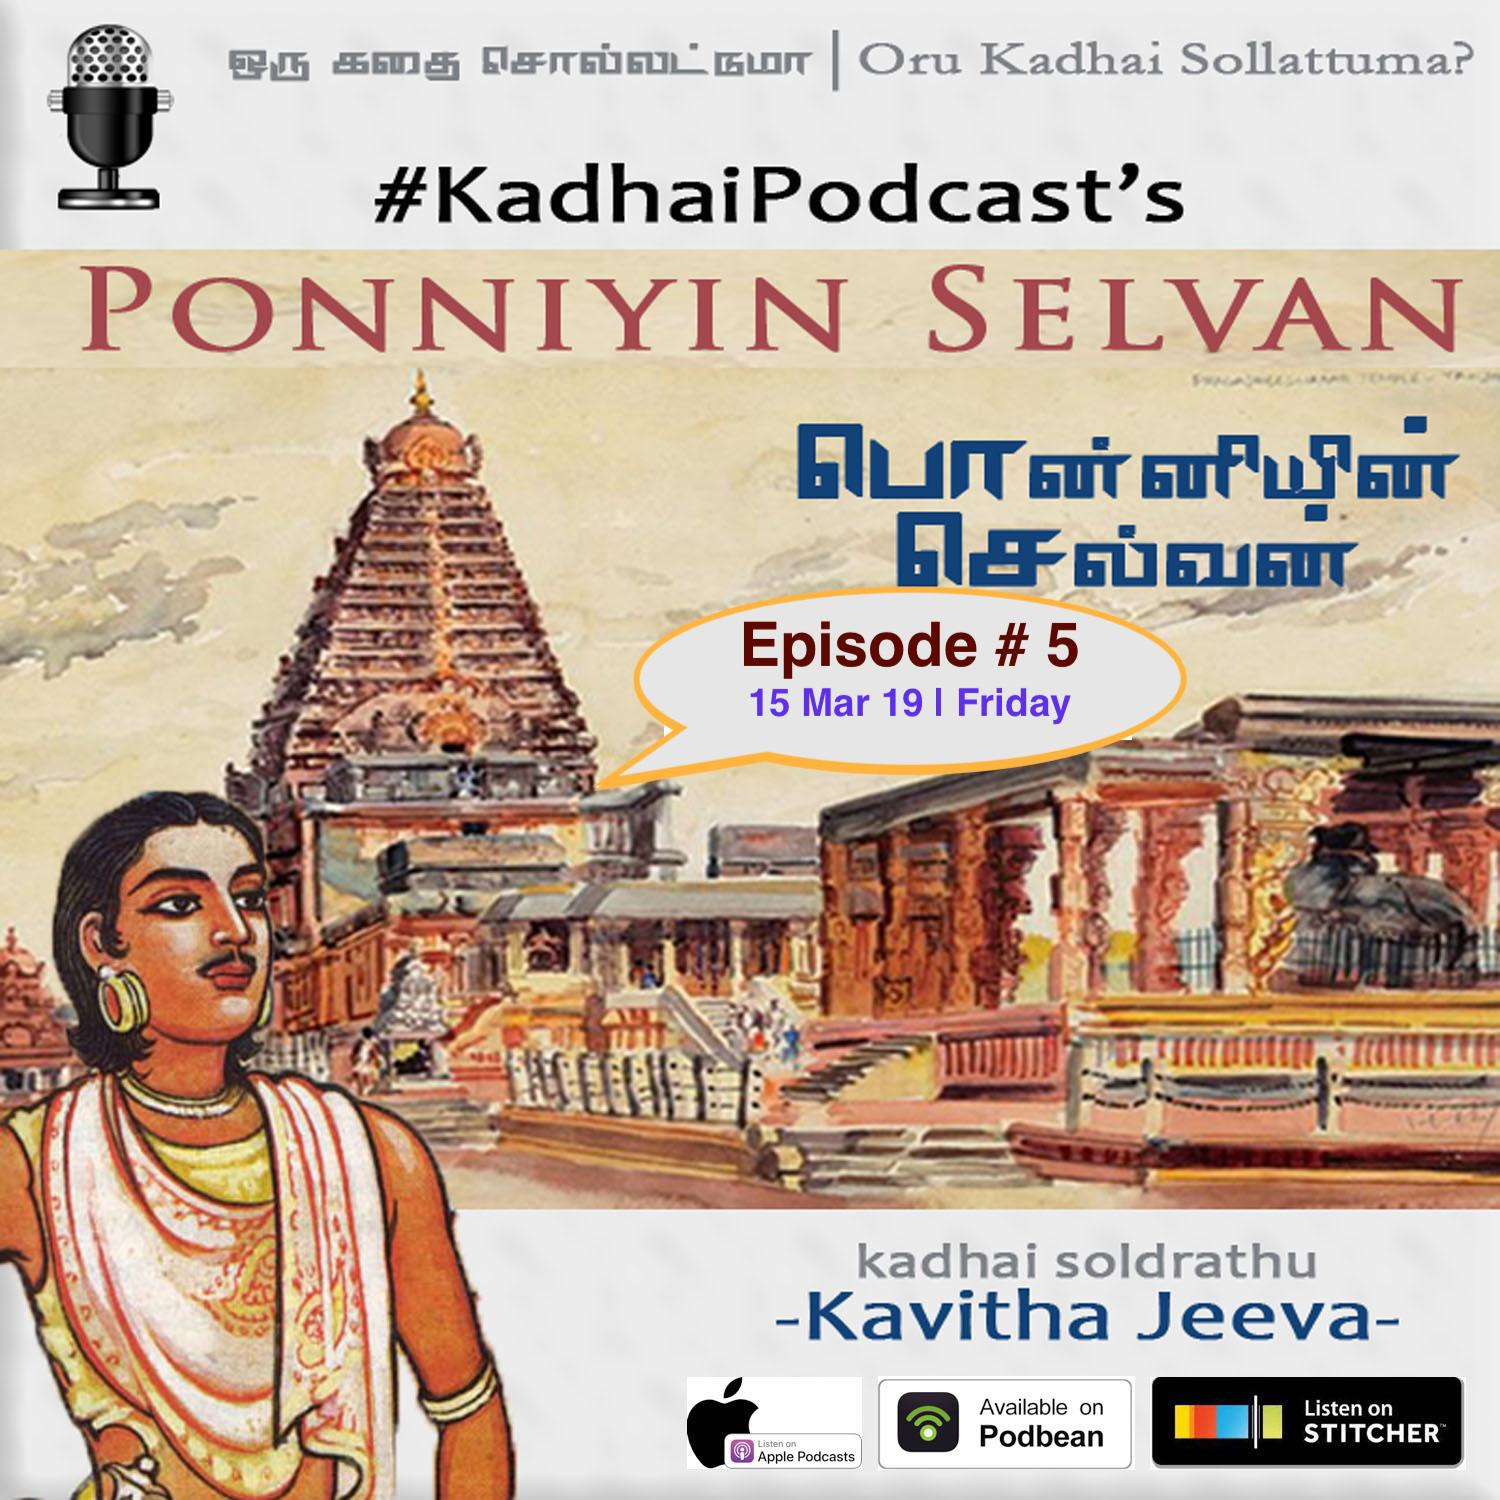 KadhaiPodcast's Ponniyin Selvan - Episode # 5